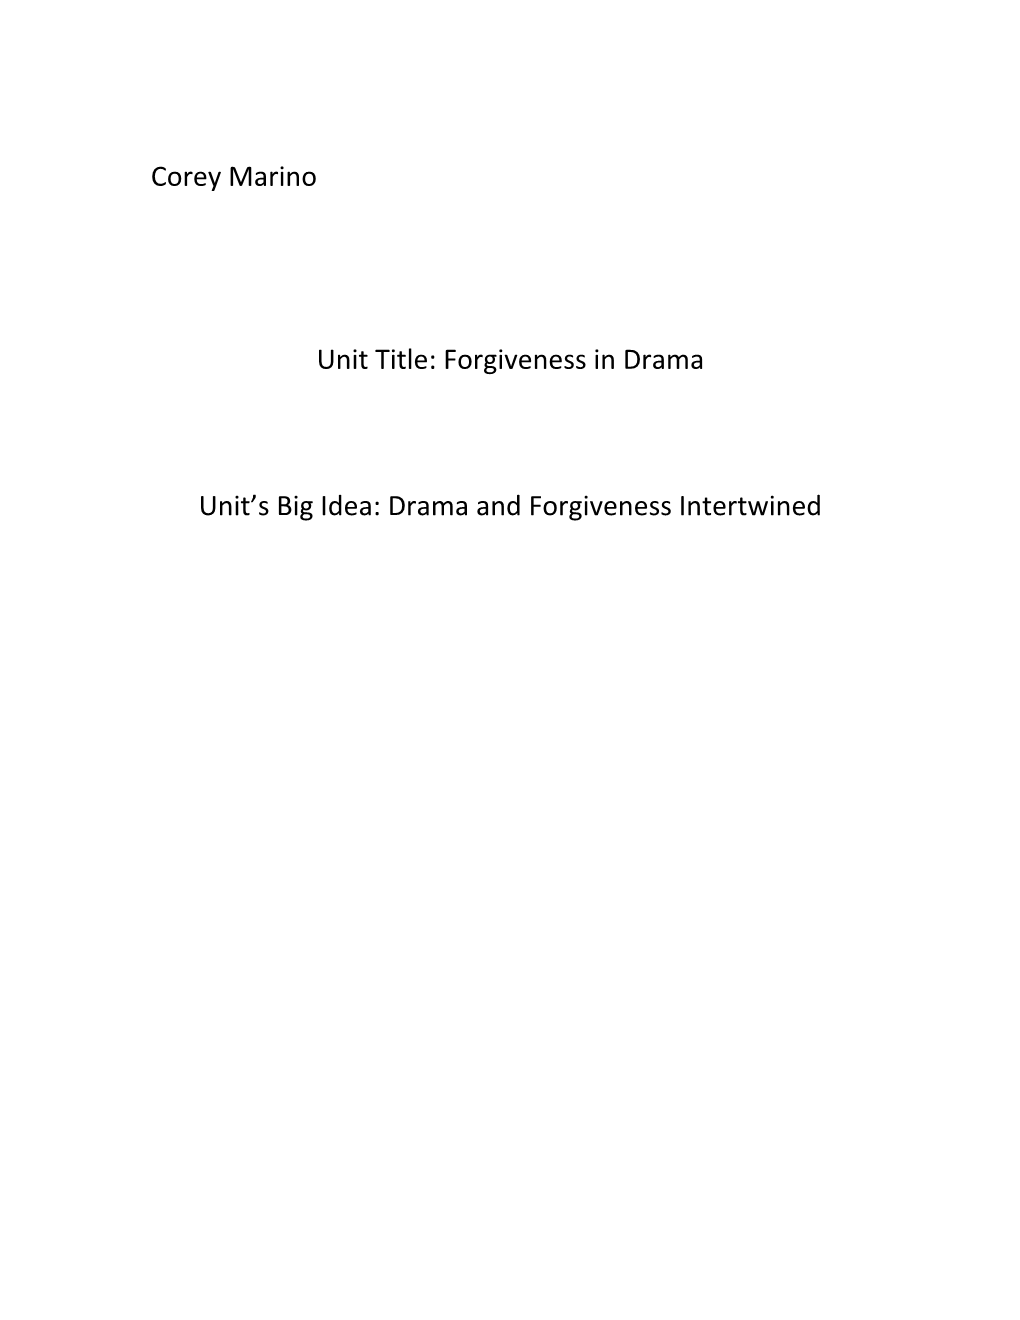 Unit S Big Idea: Drama and Forgiveness Intertwined